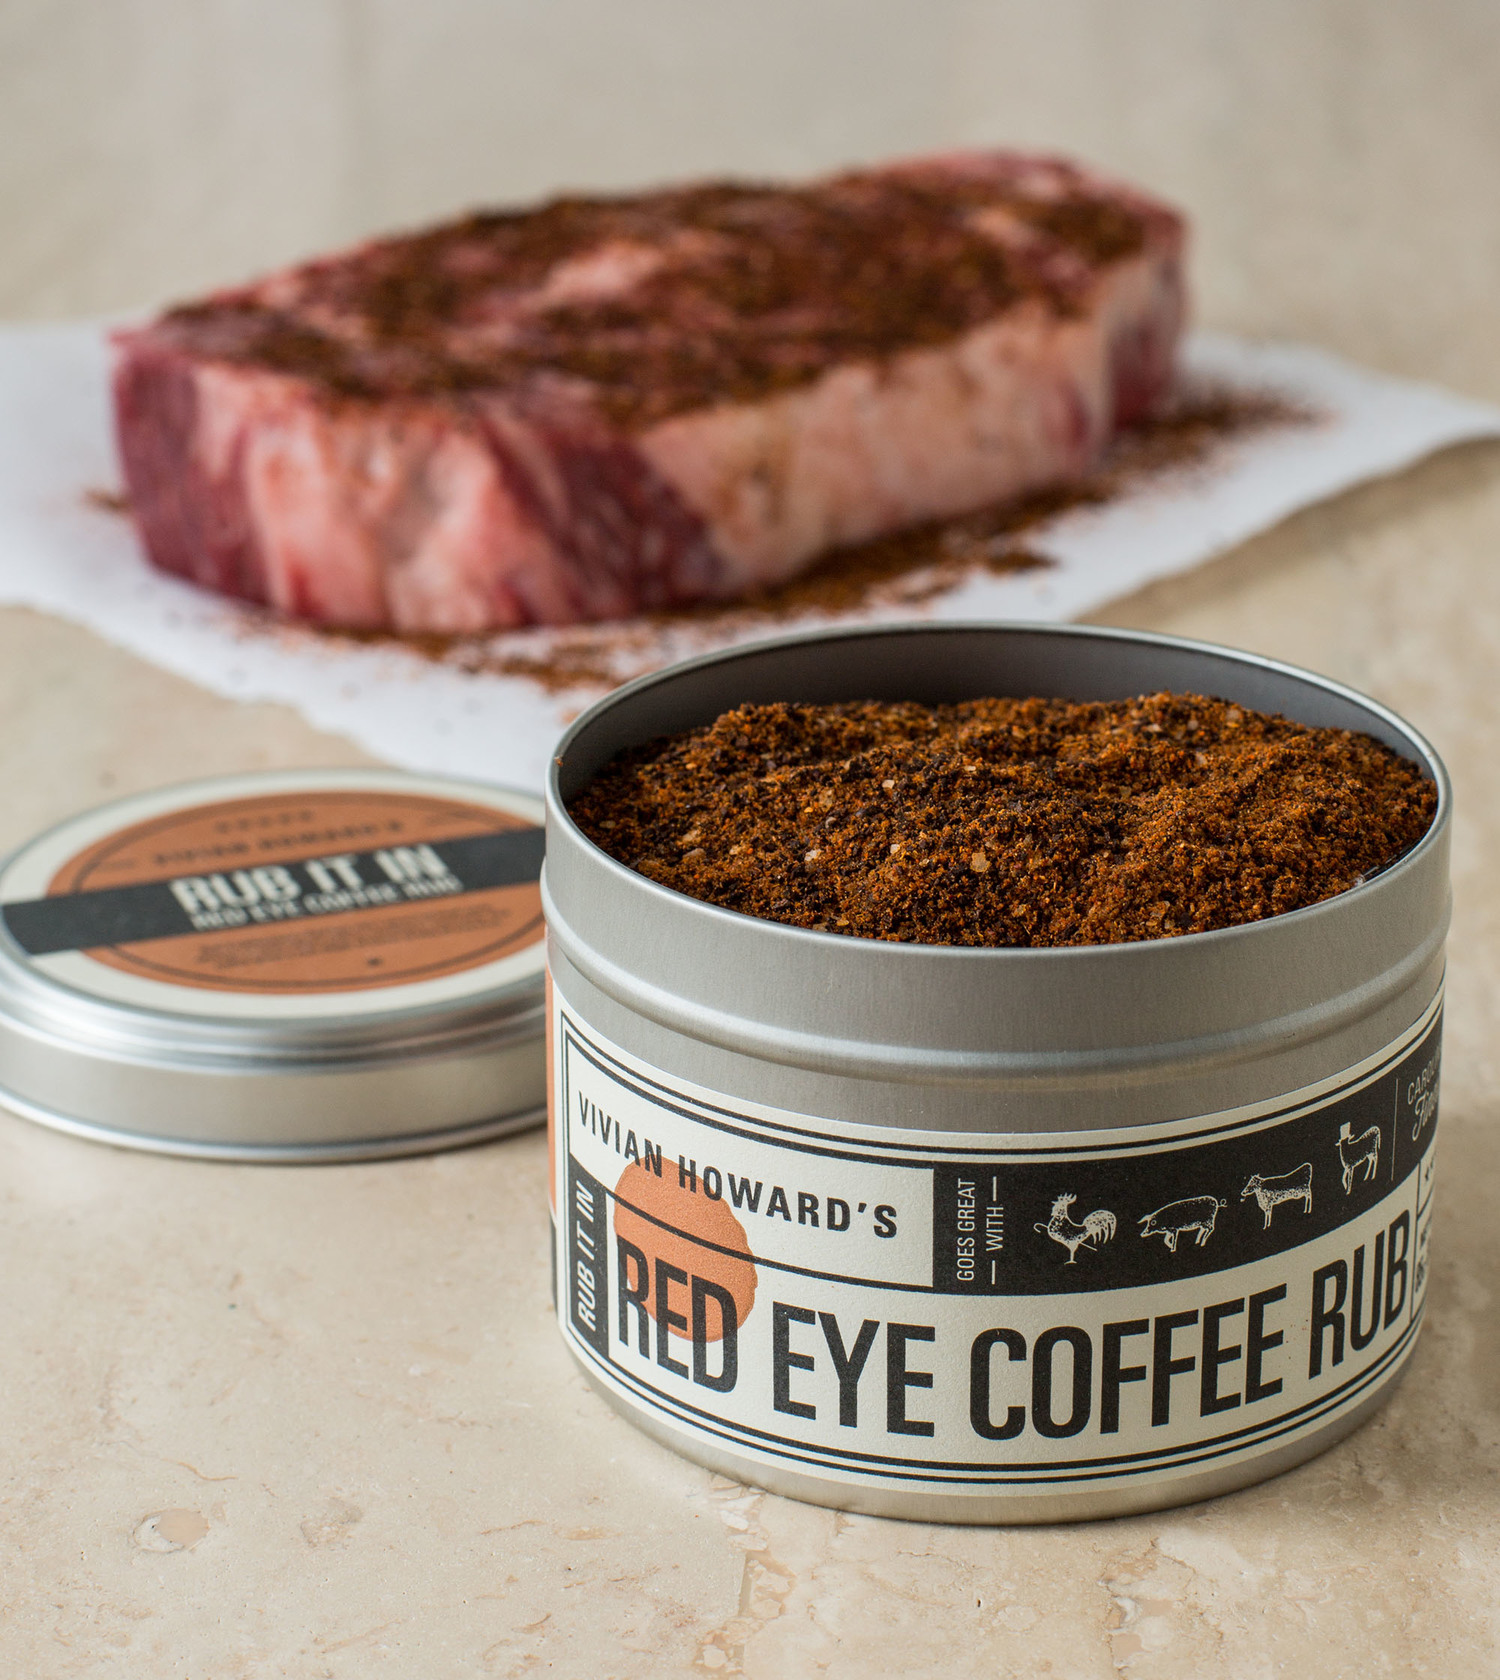 Trader Joe's BBQ Rub and Seasoning Blend with Coffee and Garlic